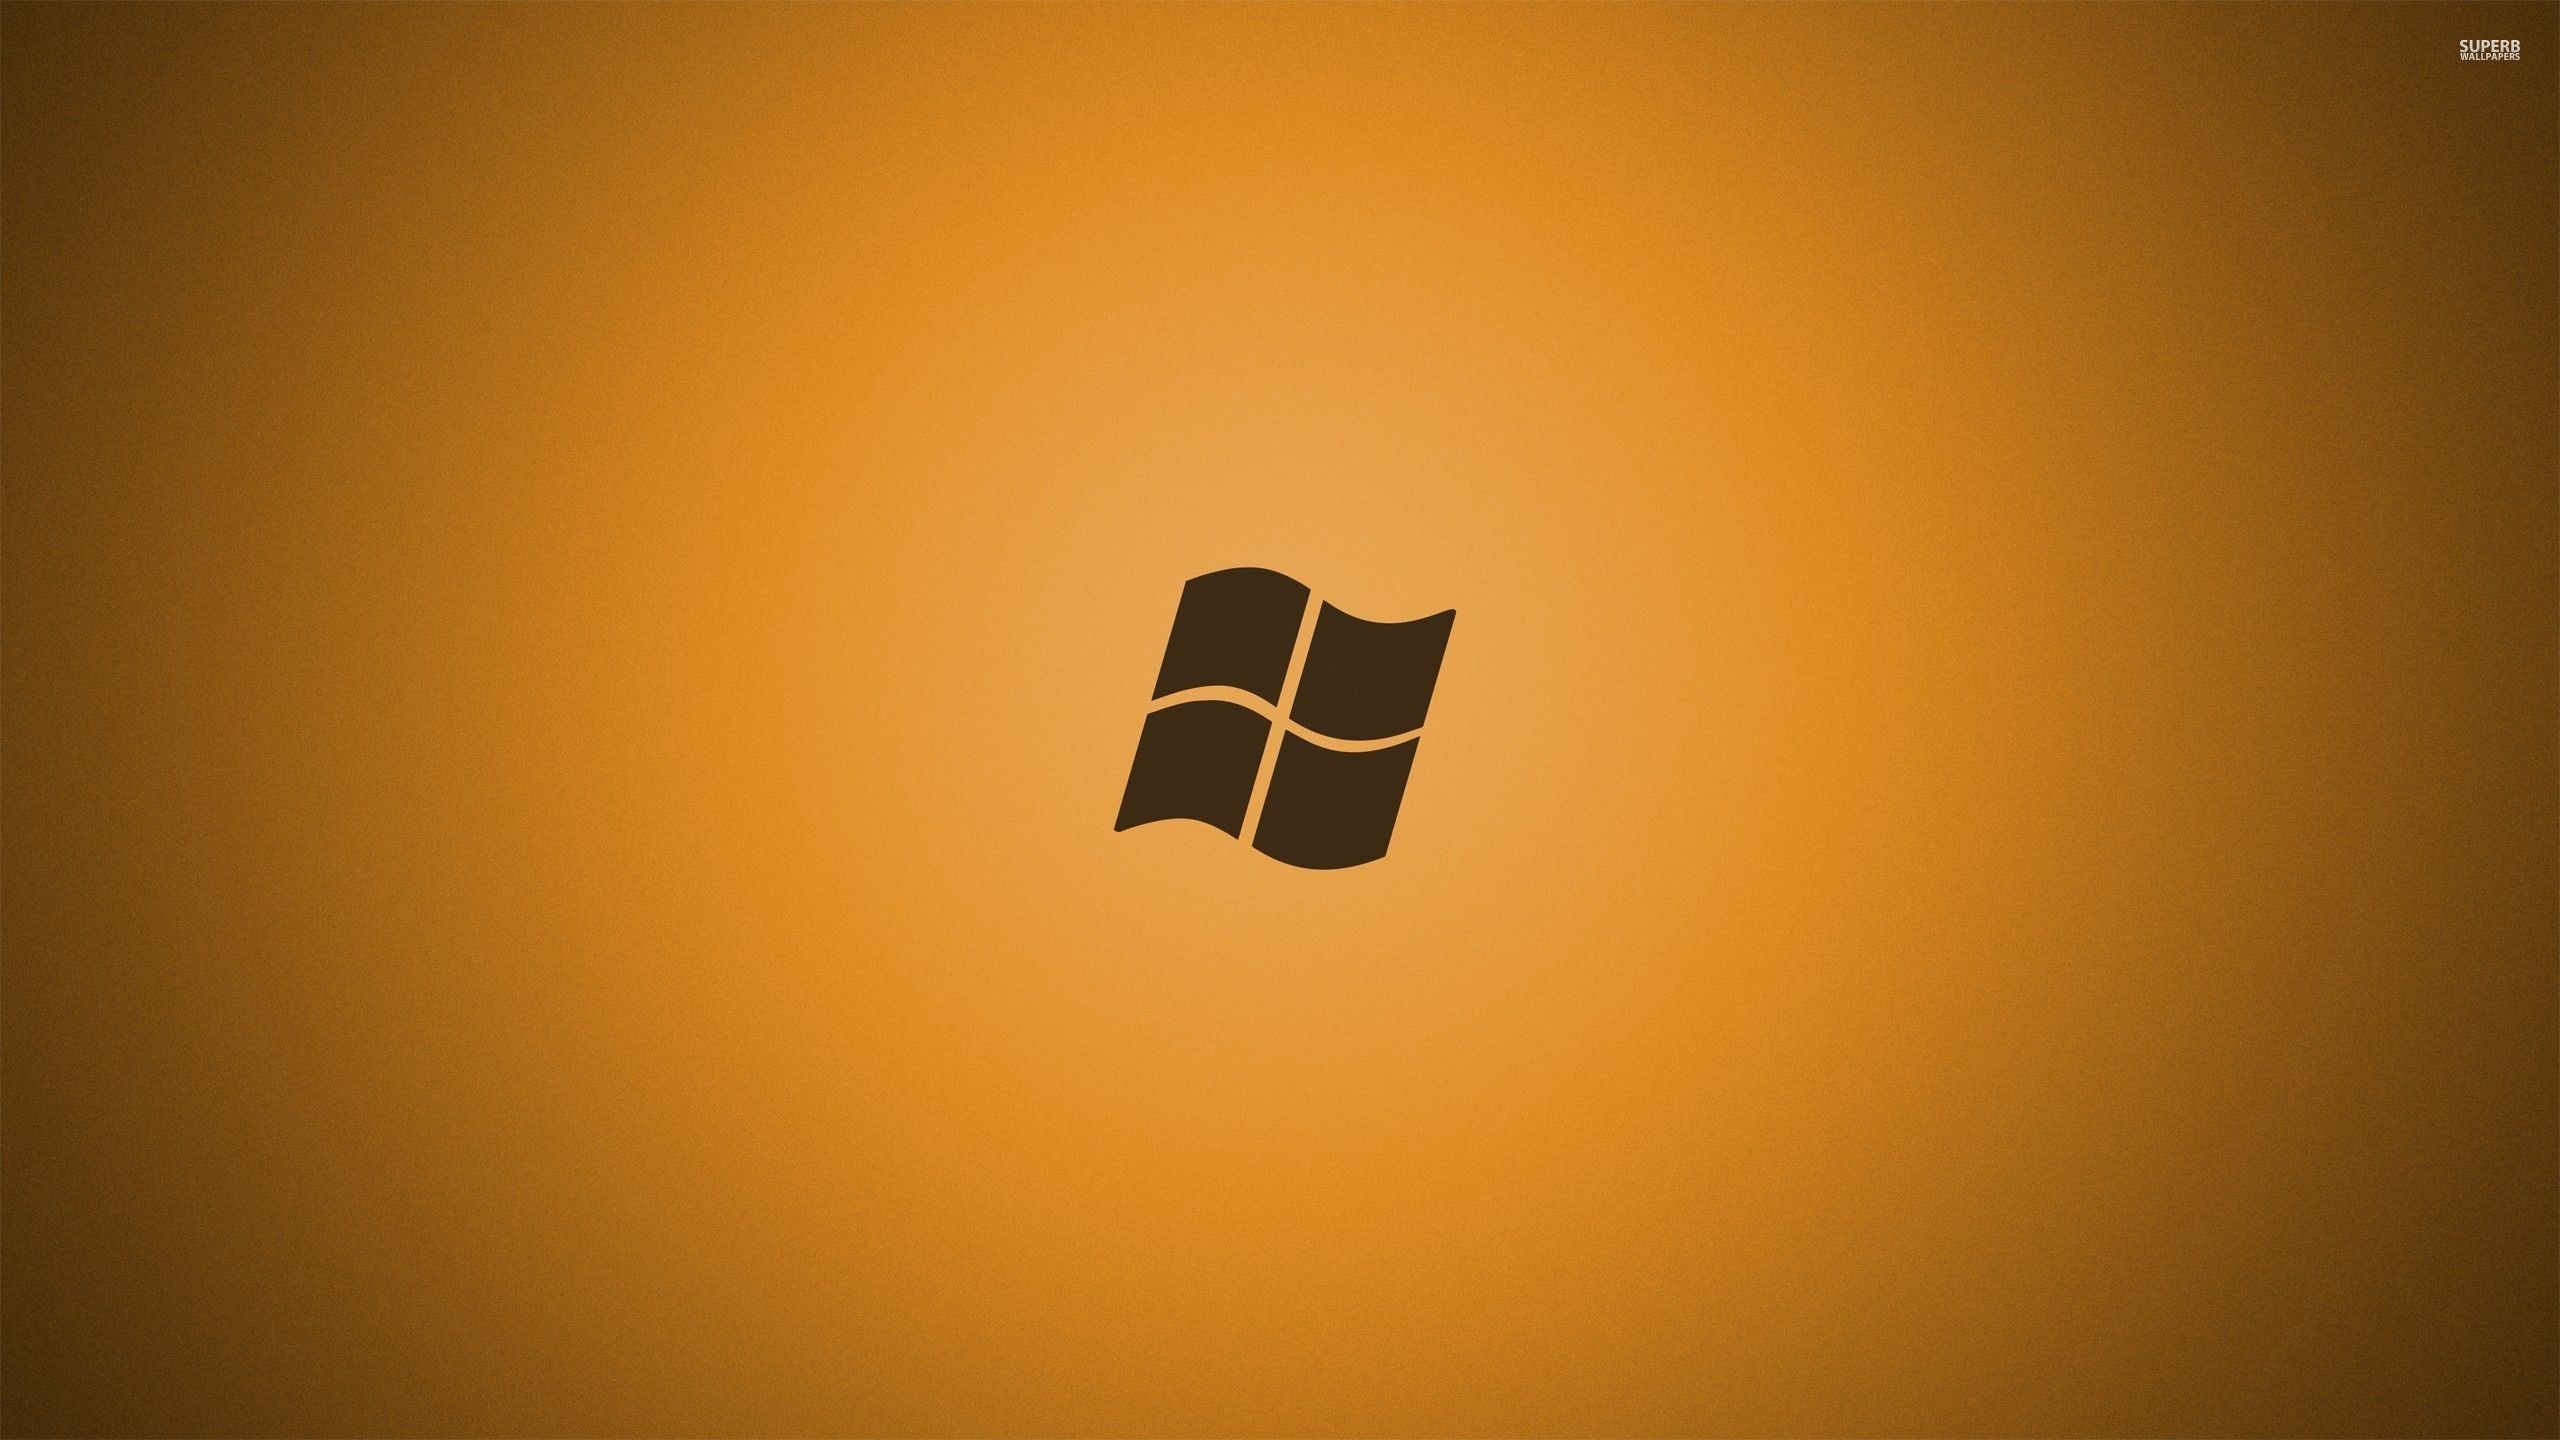 Windows 7 logo on golden background 51081 2560×1440